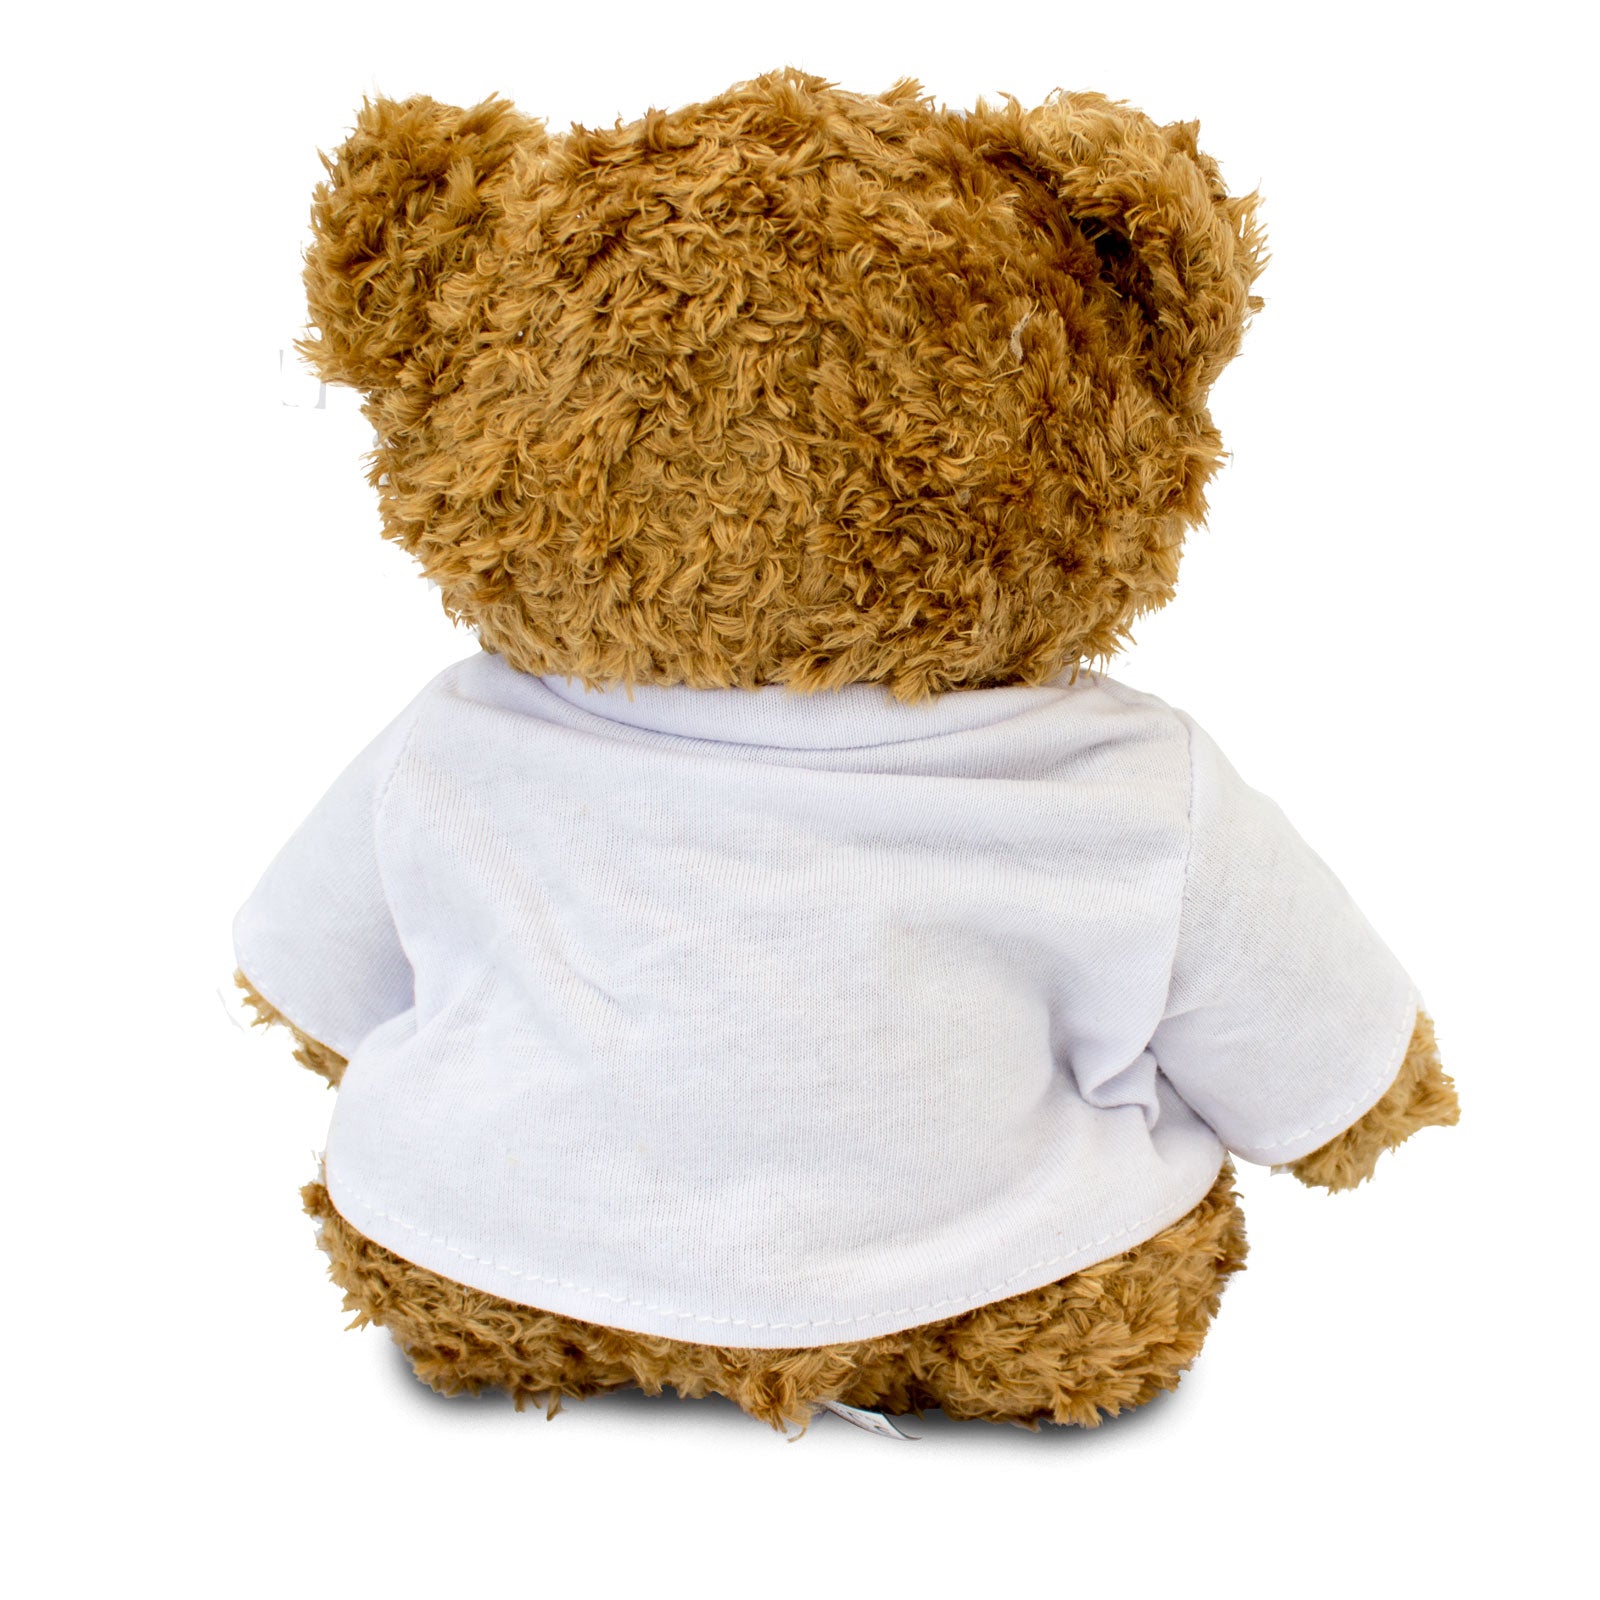 Get Well Soon Jemima - Teddy Bear